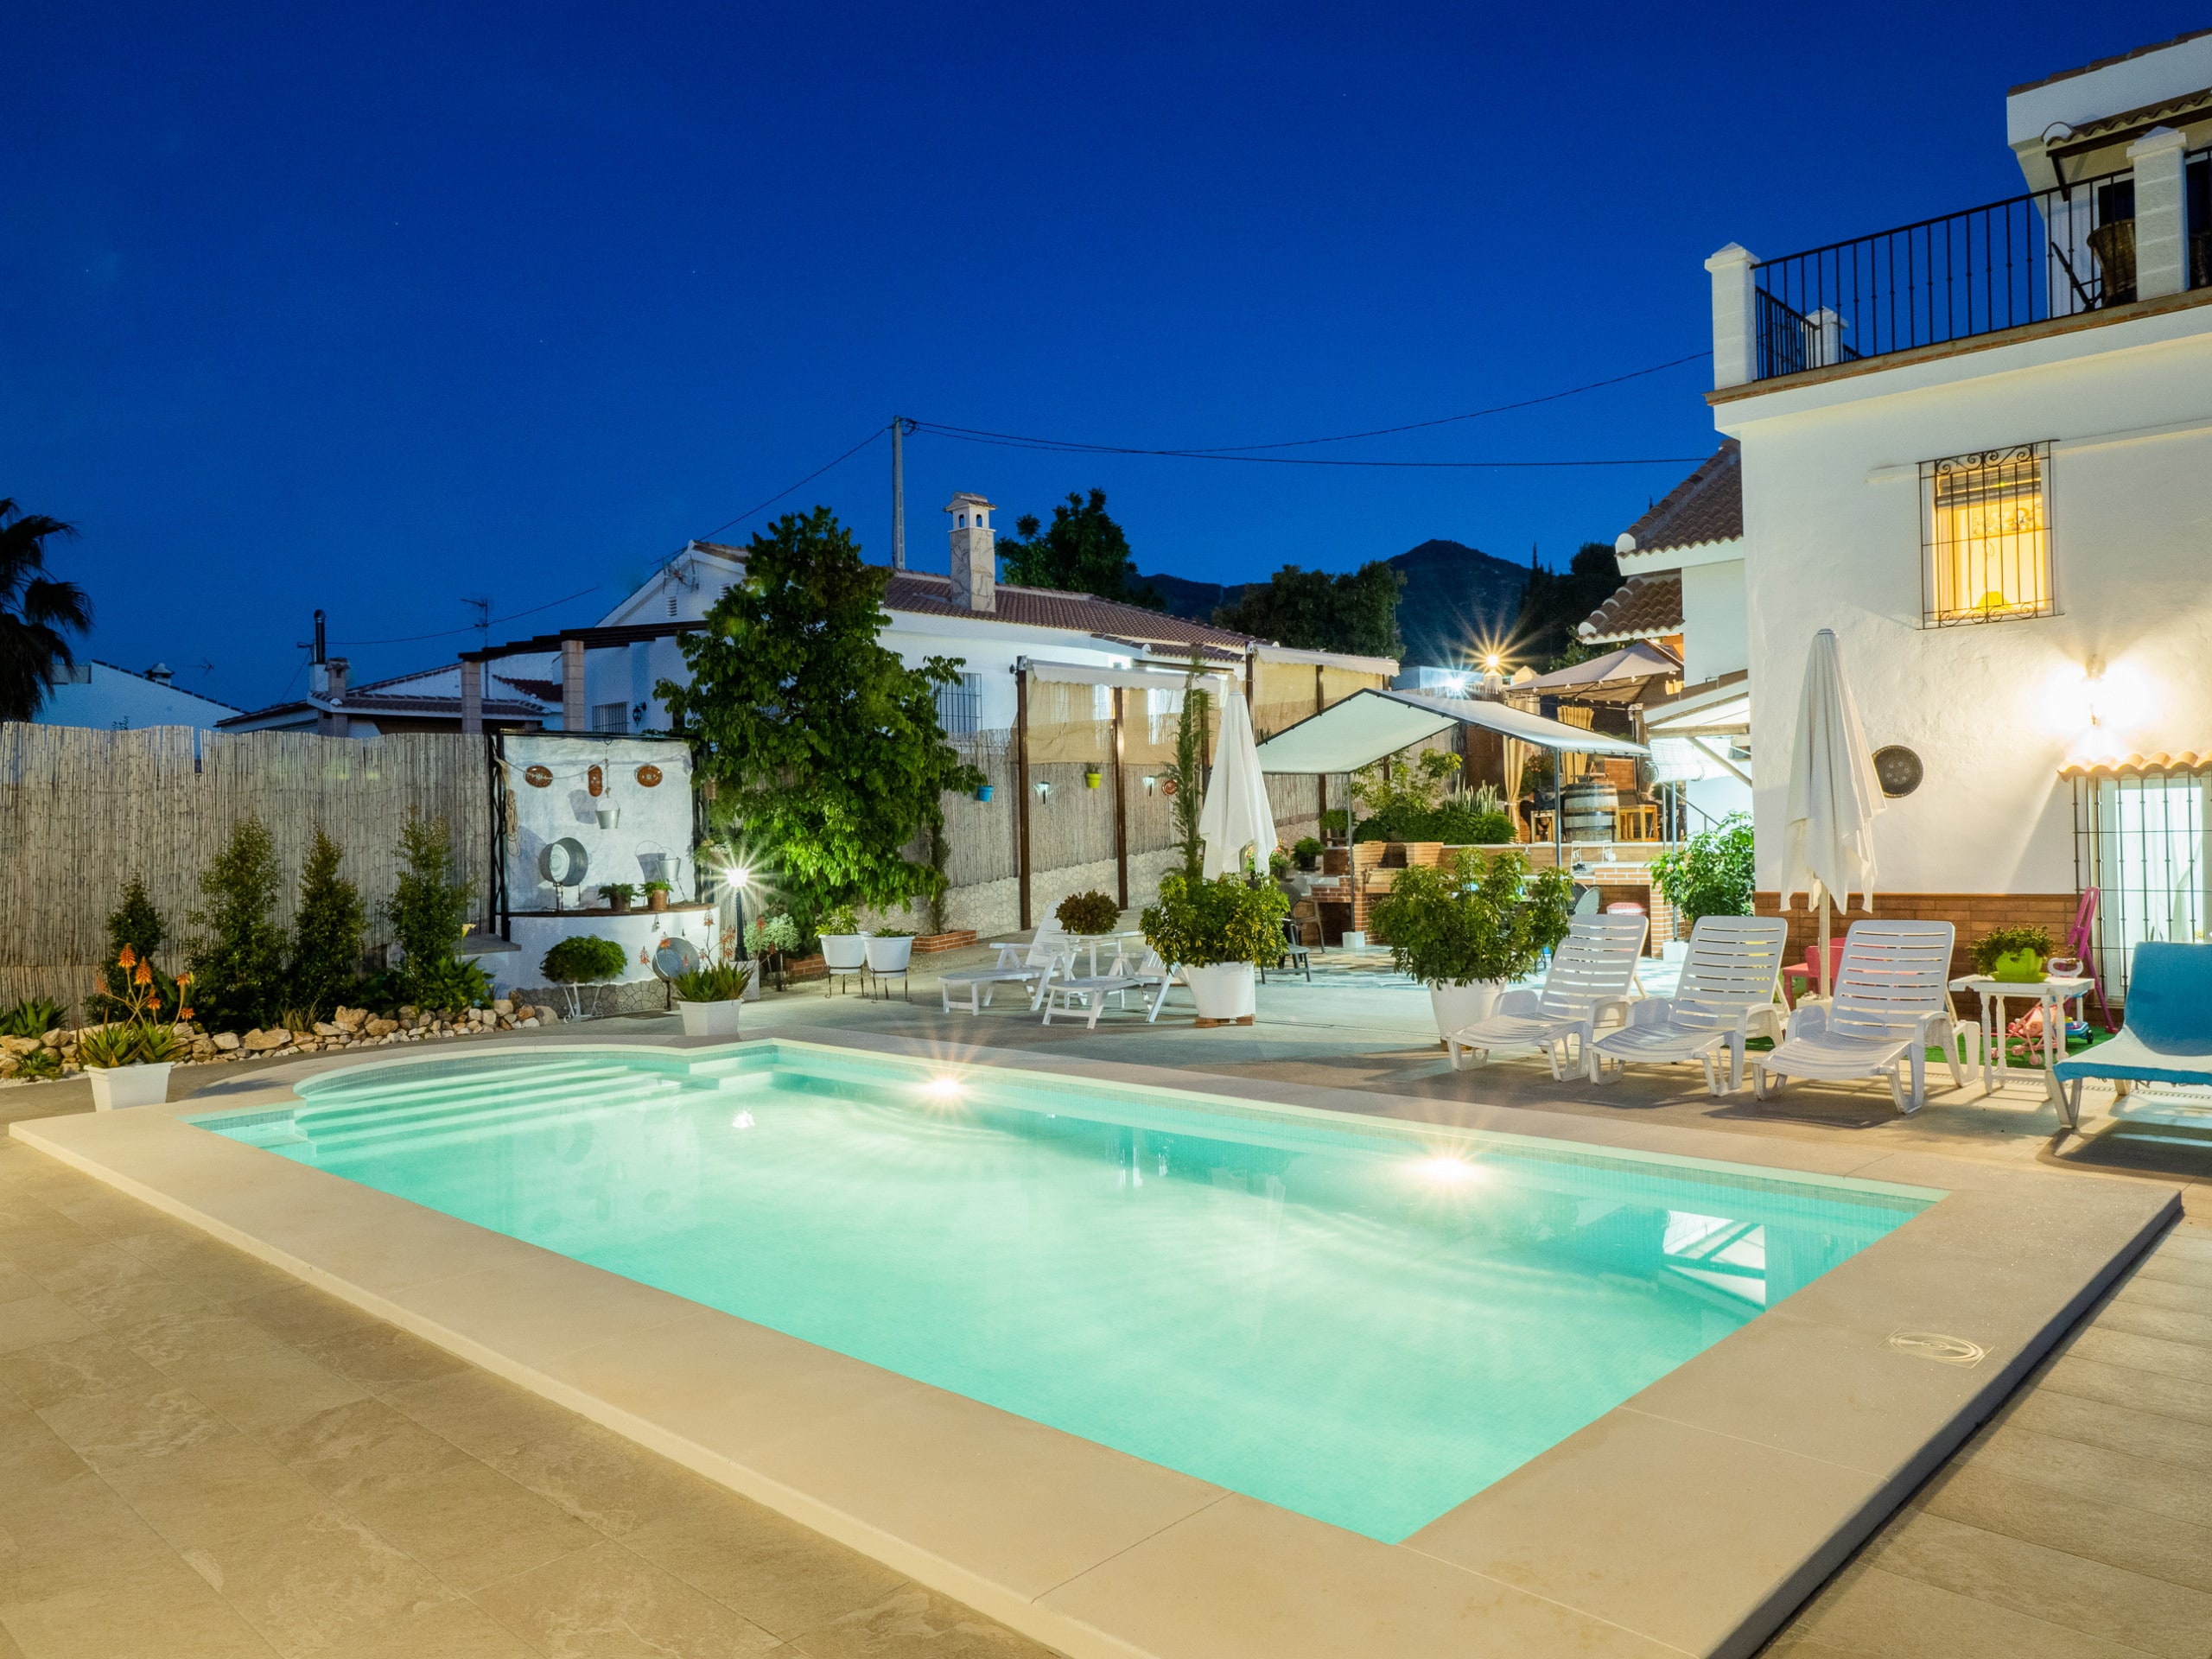 Enjoy the pool of this house in Alhaurín de la Torre